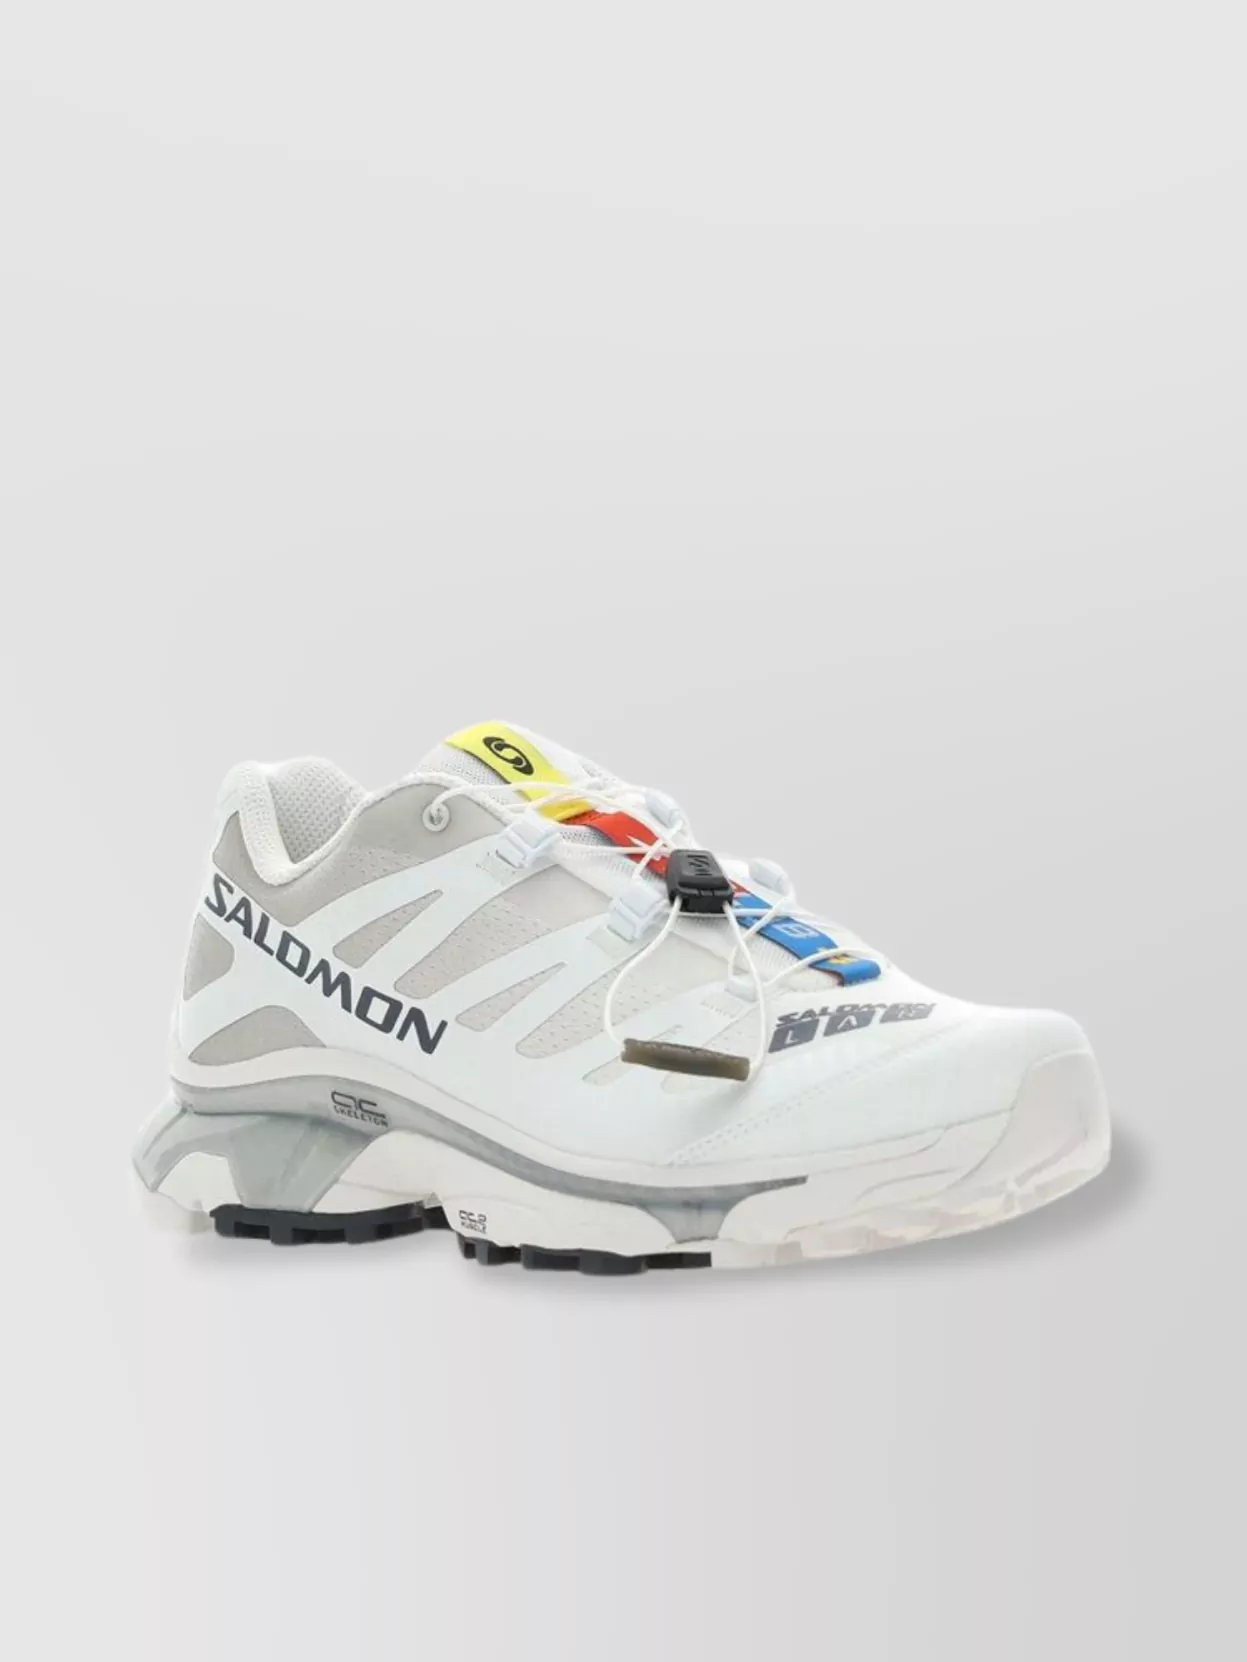 Shop Salomon Og-4 Xt Sneakers With Reinforced Toe Cap